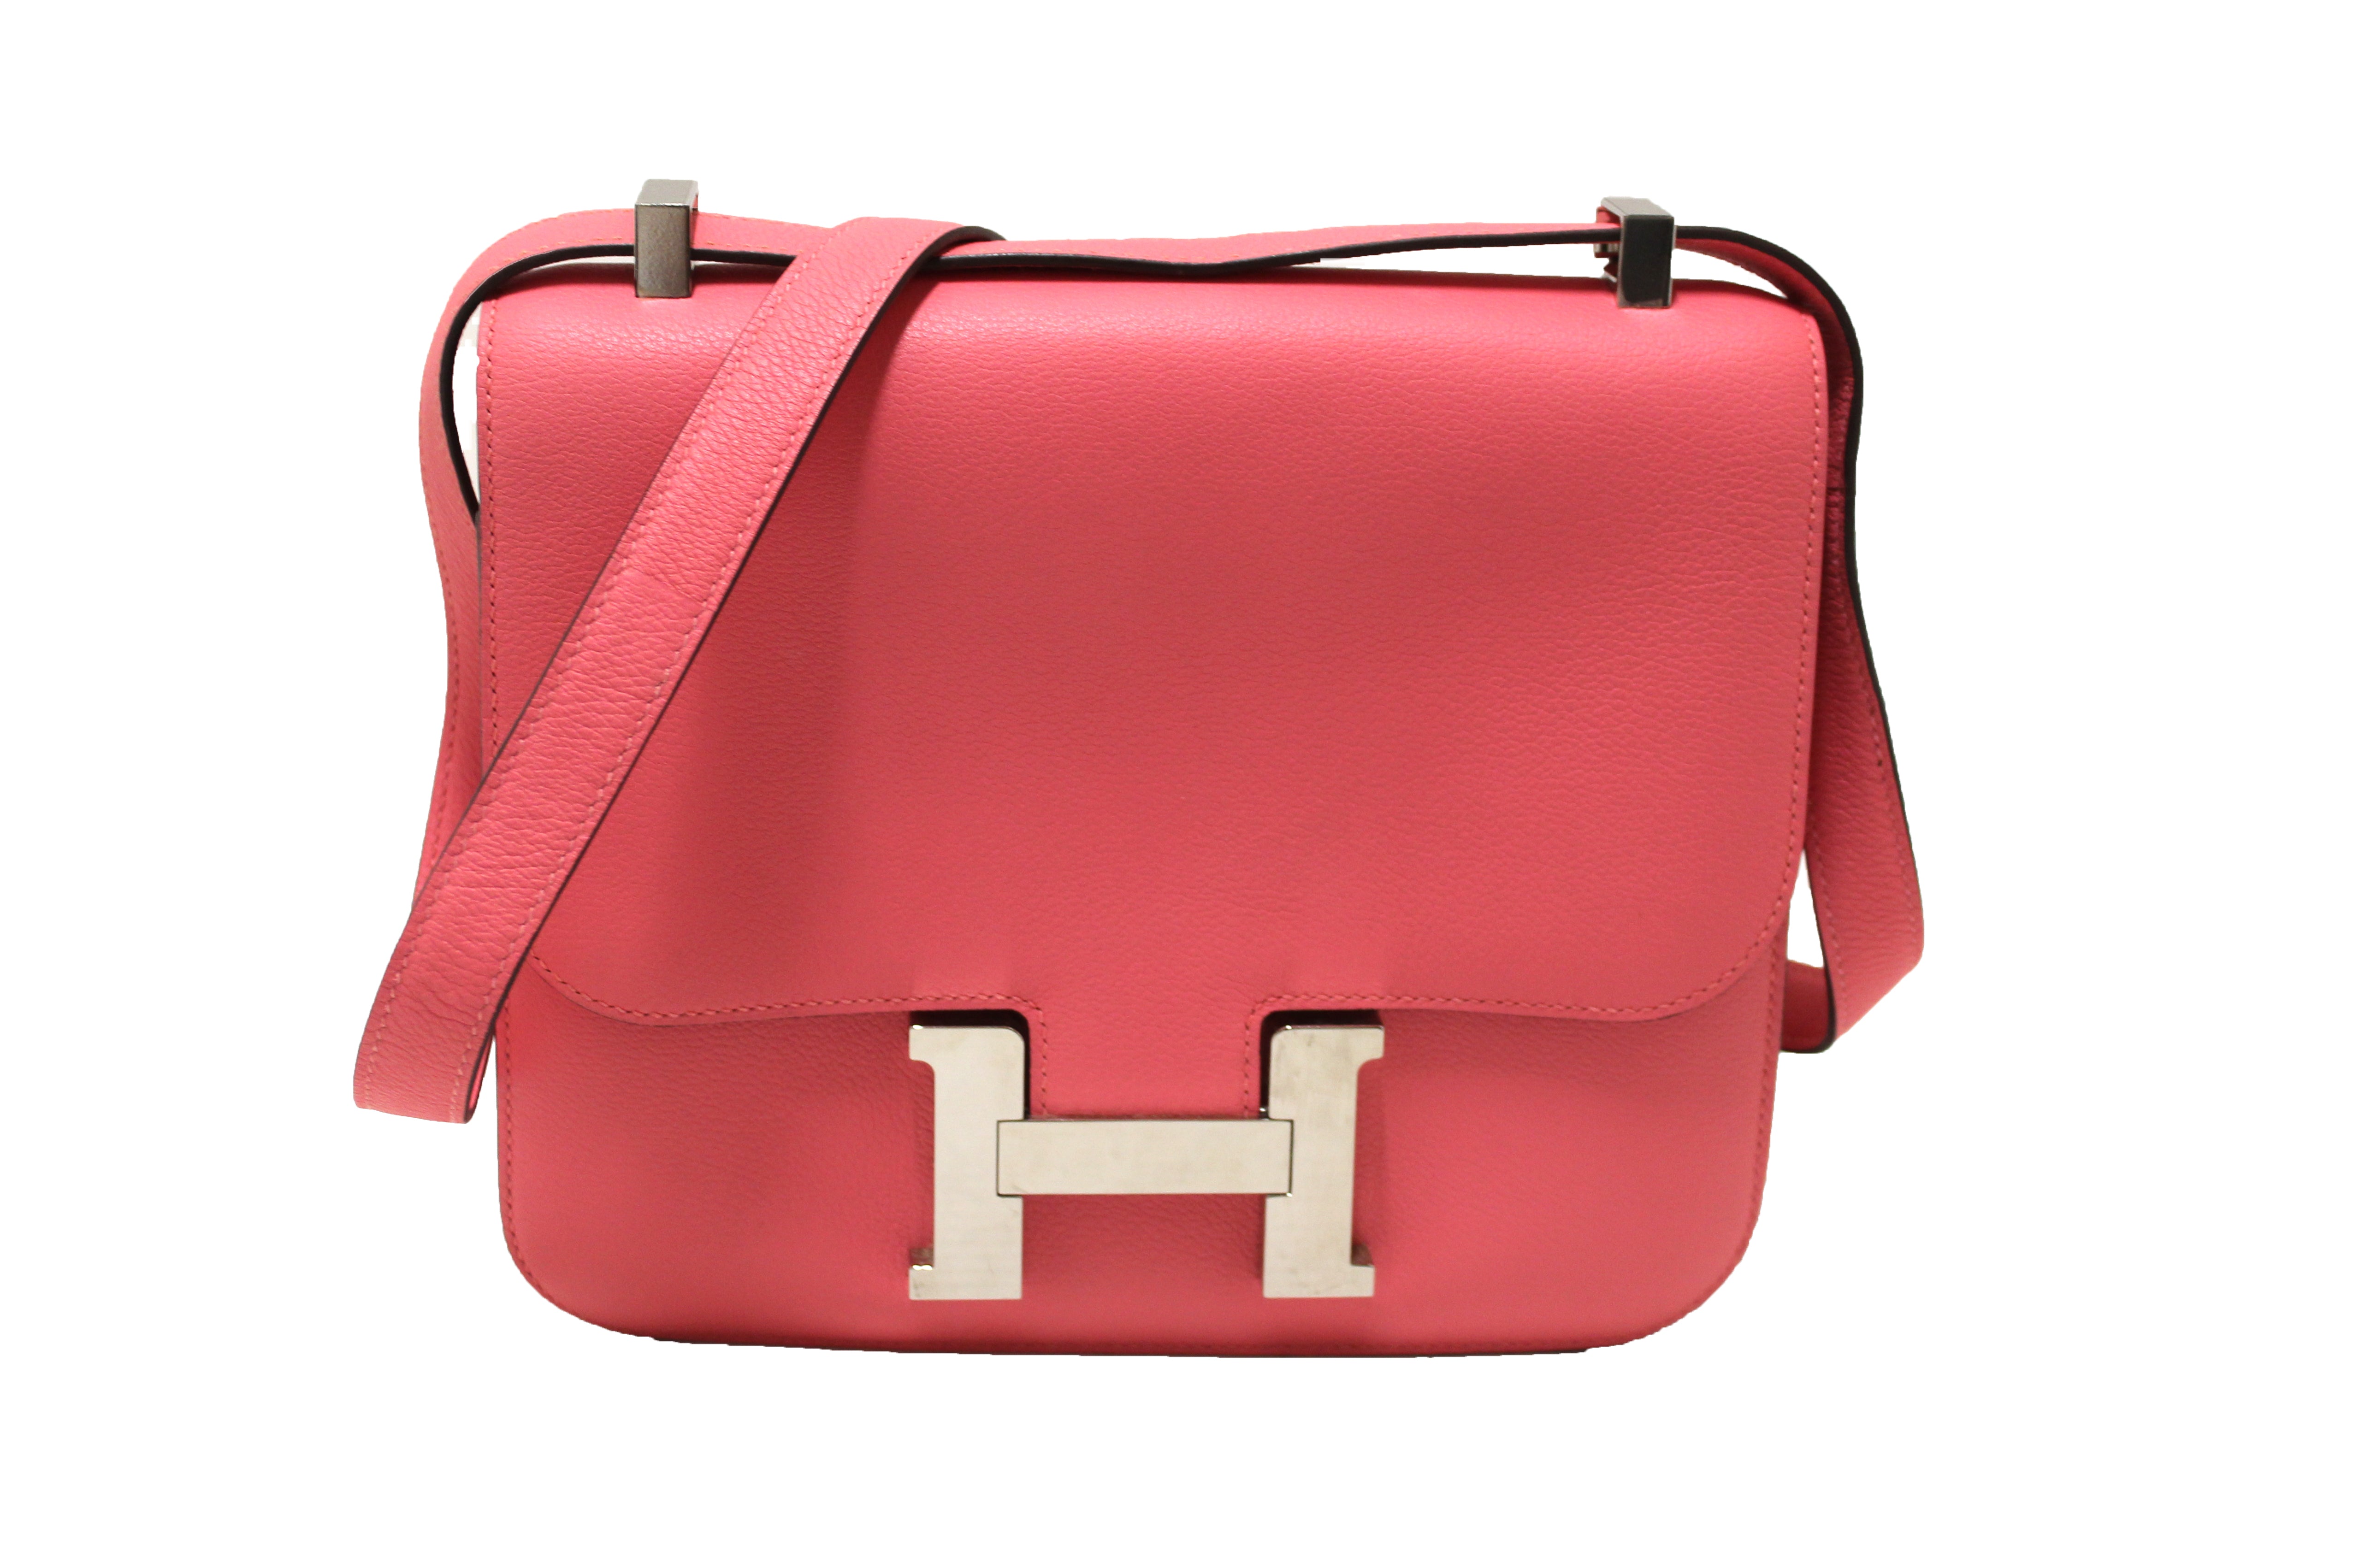 Constance leather handbag